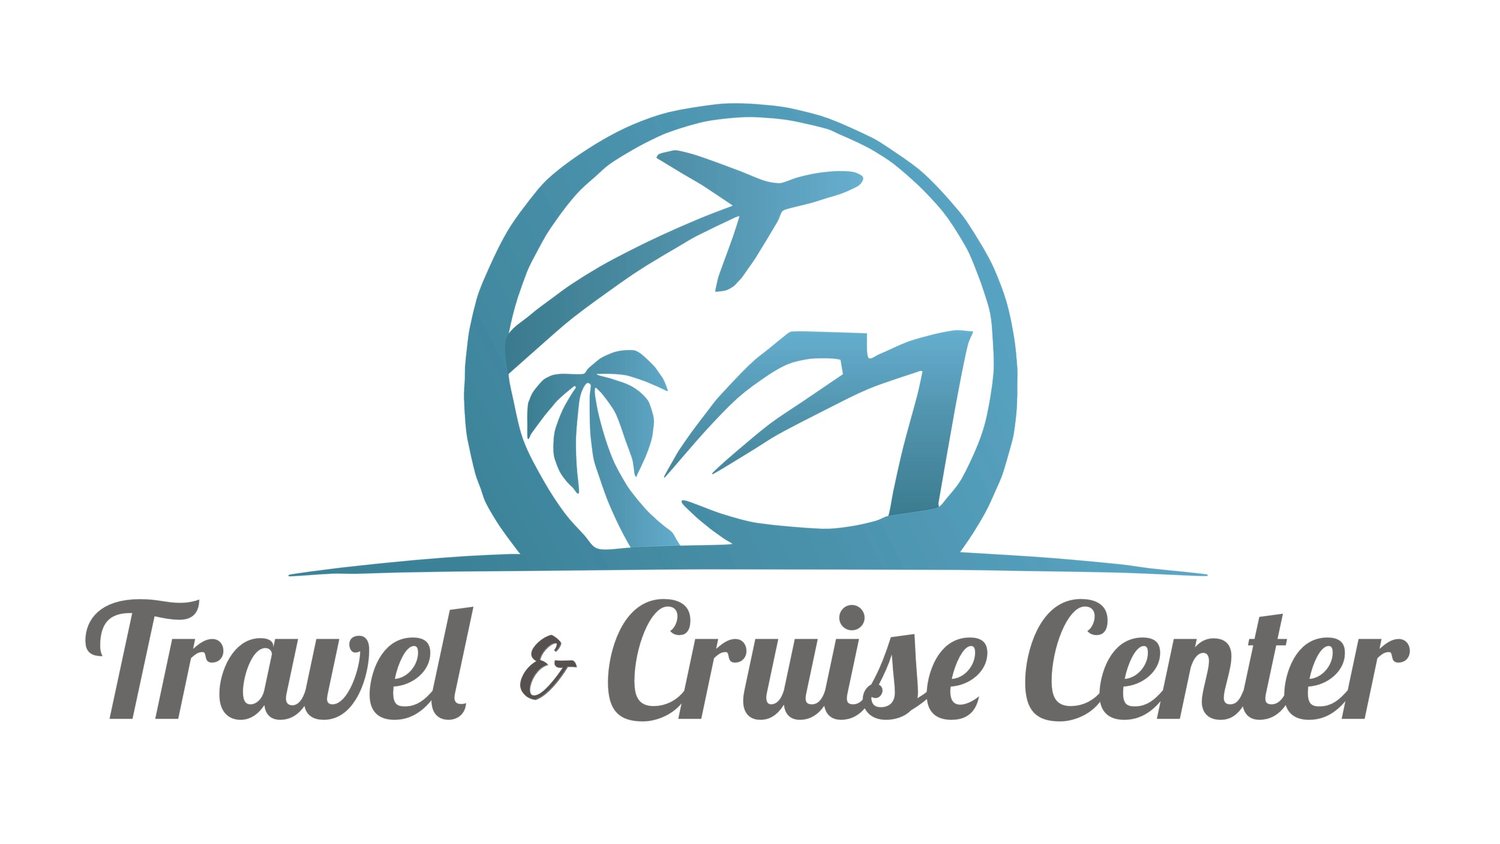 Travel & Cruise Center